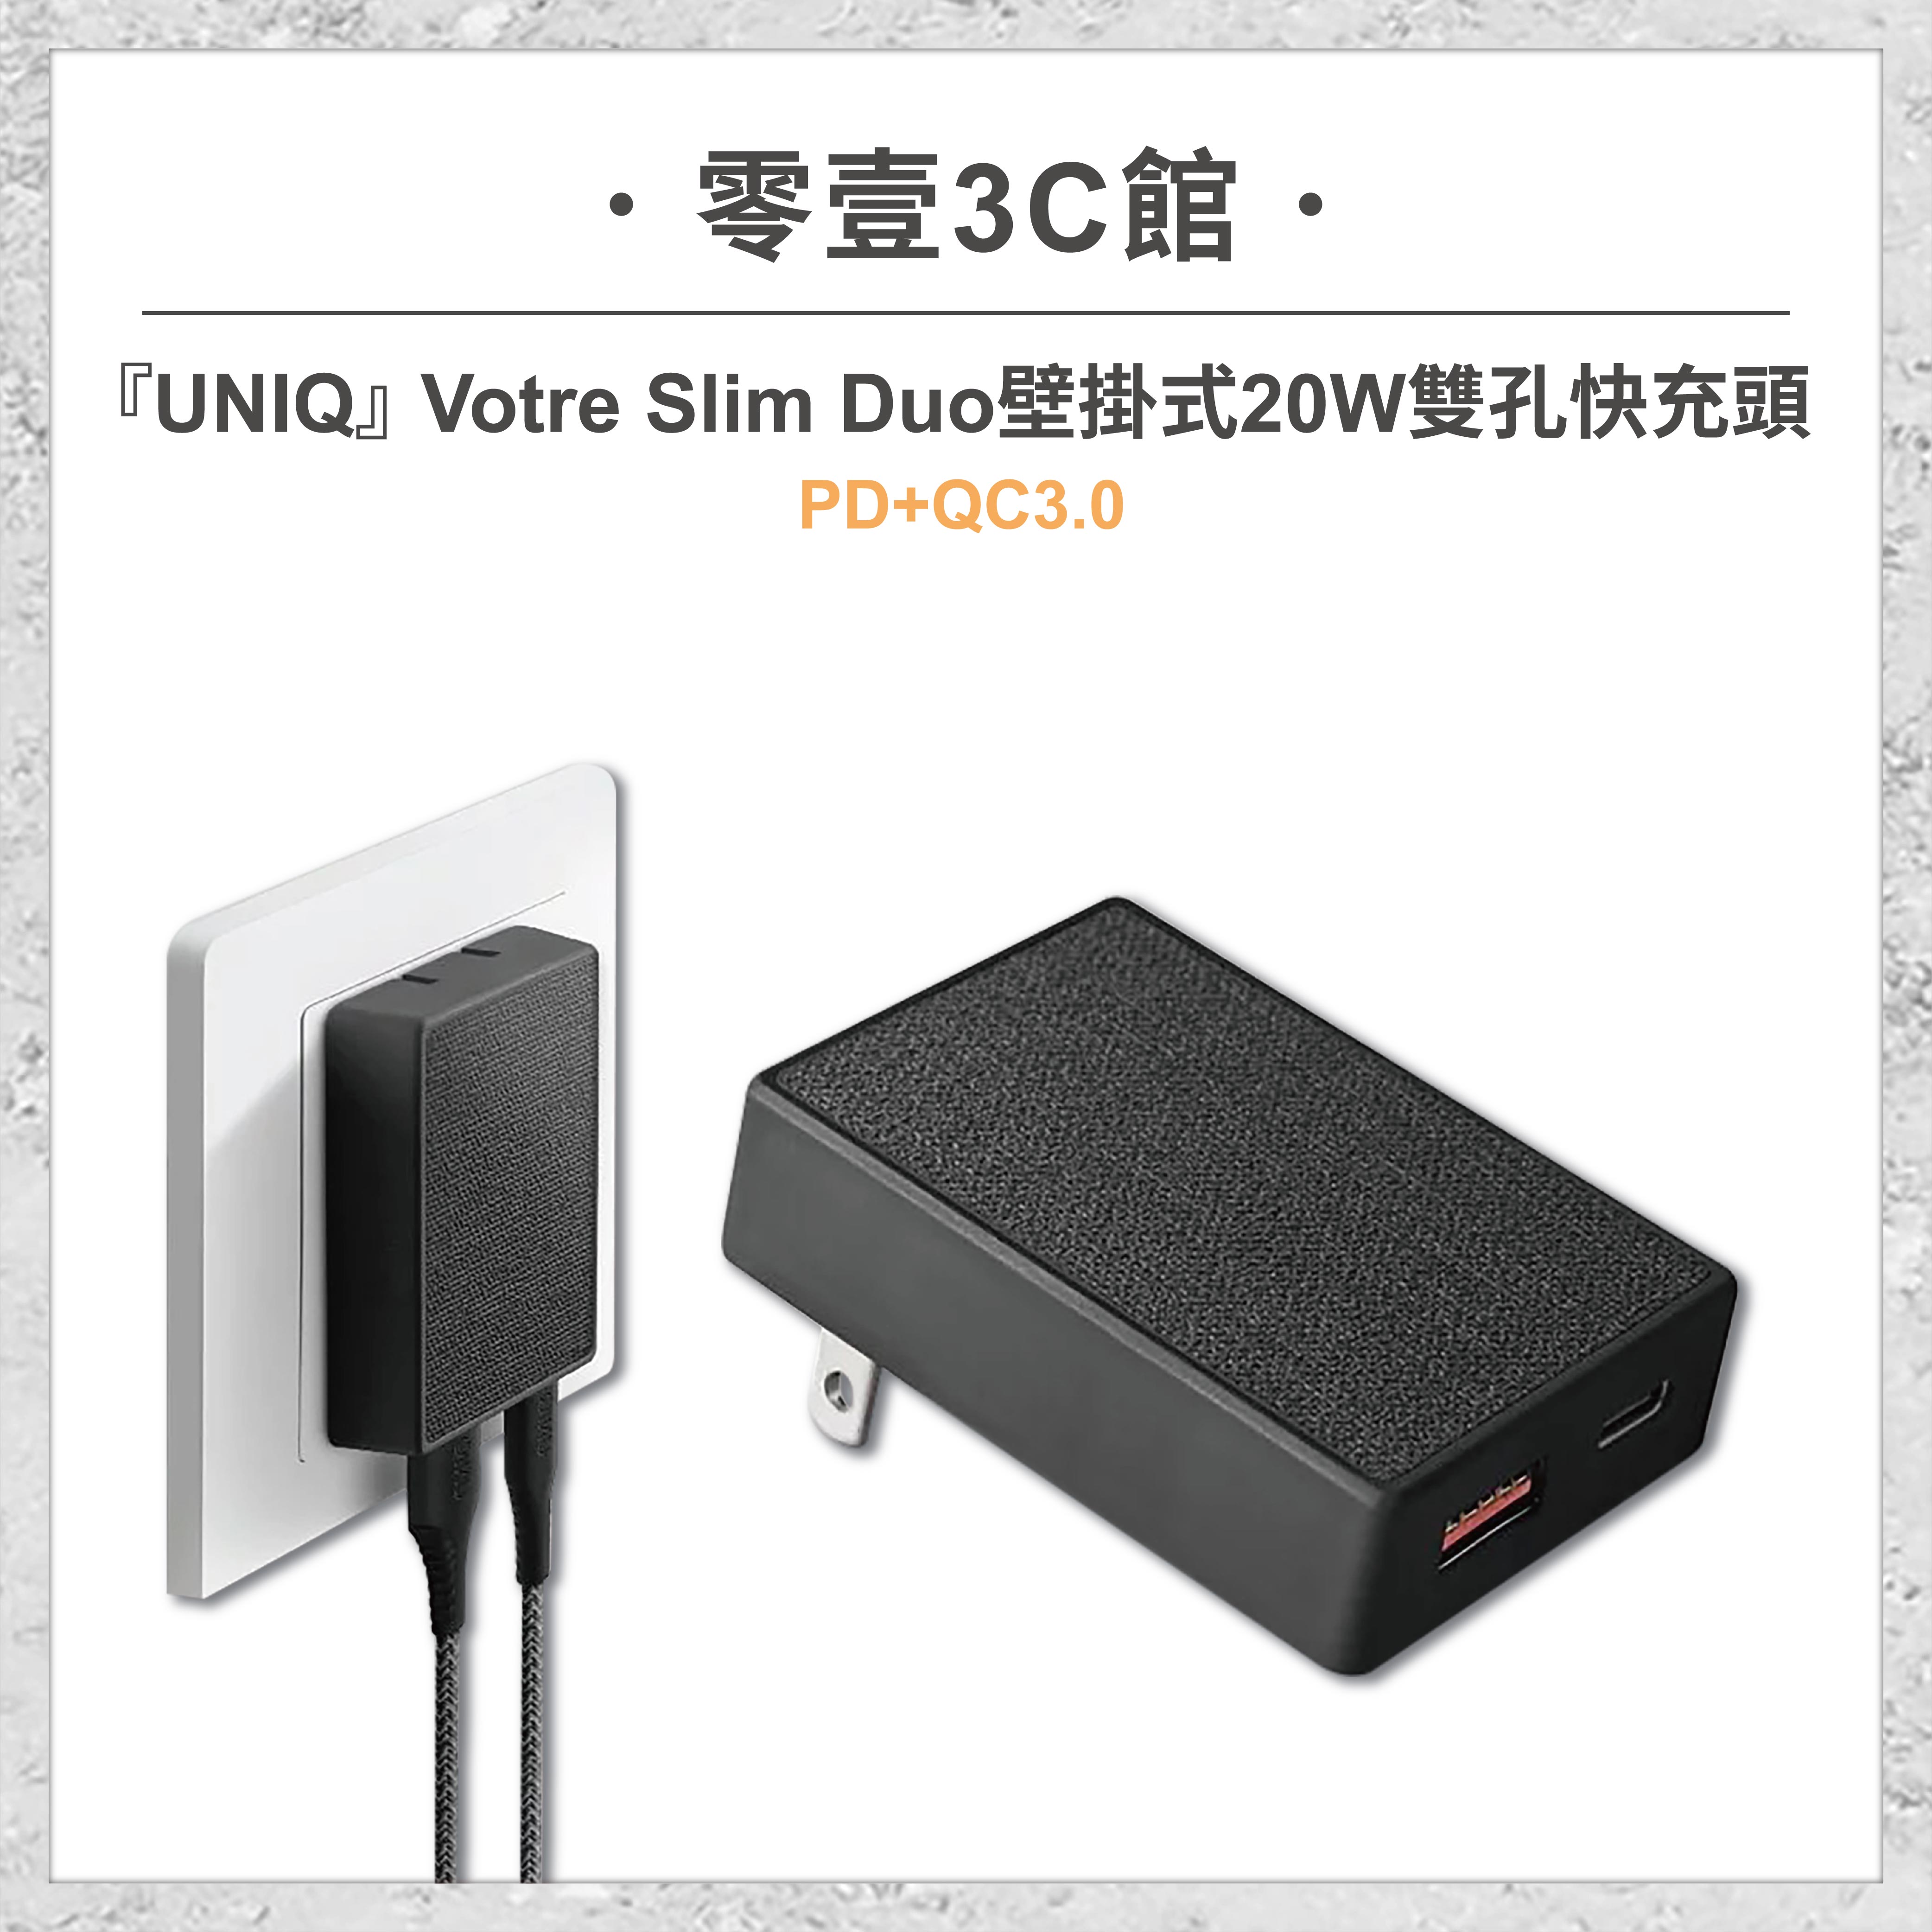 『UNIQ』Votre Slim Duo 壁掛式20W雙孔快充頭 PD+QC3.0 折疊式插頭 雙孔充電頭